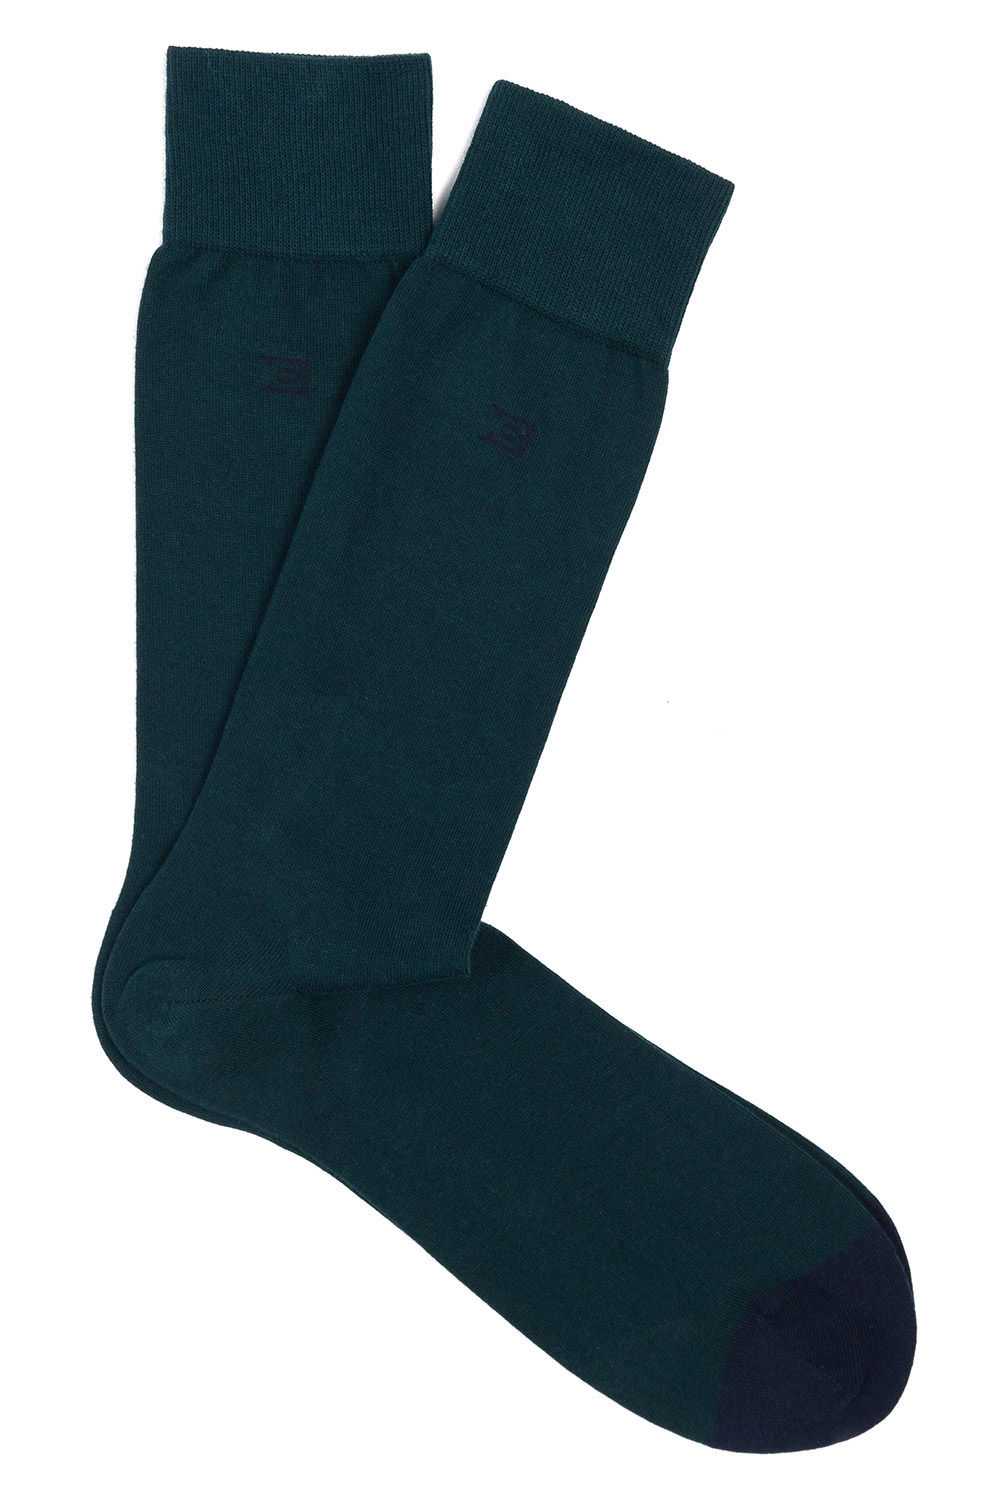 Green socks 0